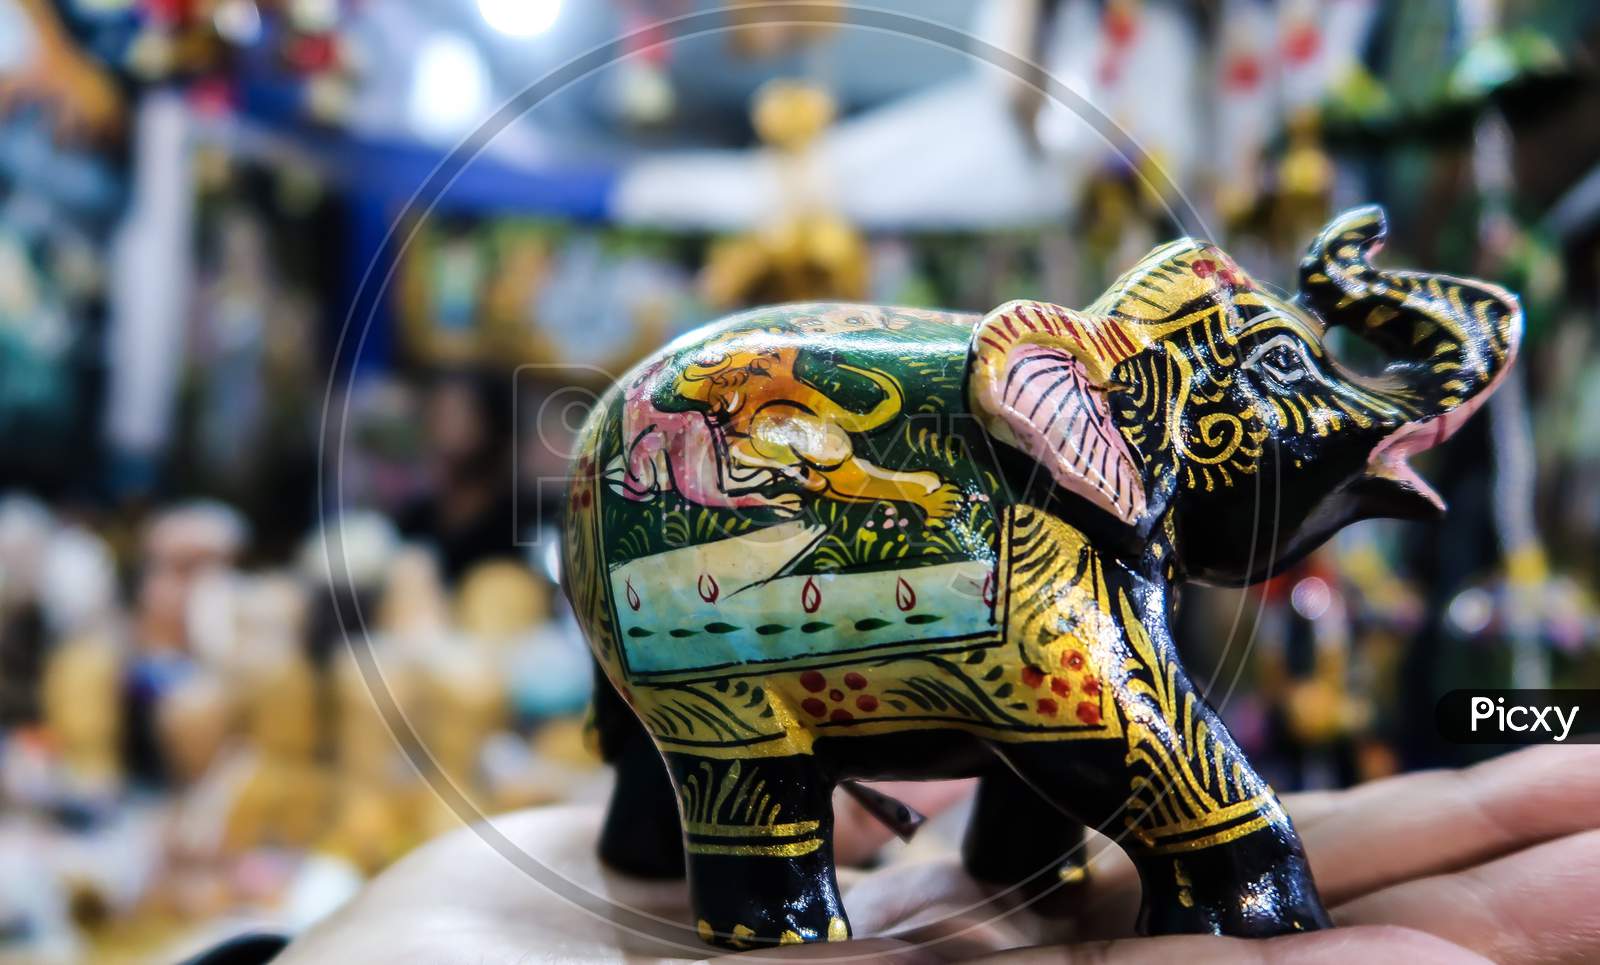 A colourful handmade Elephant sculpture